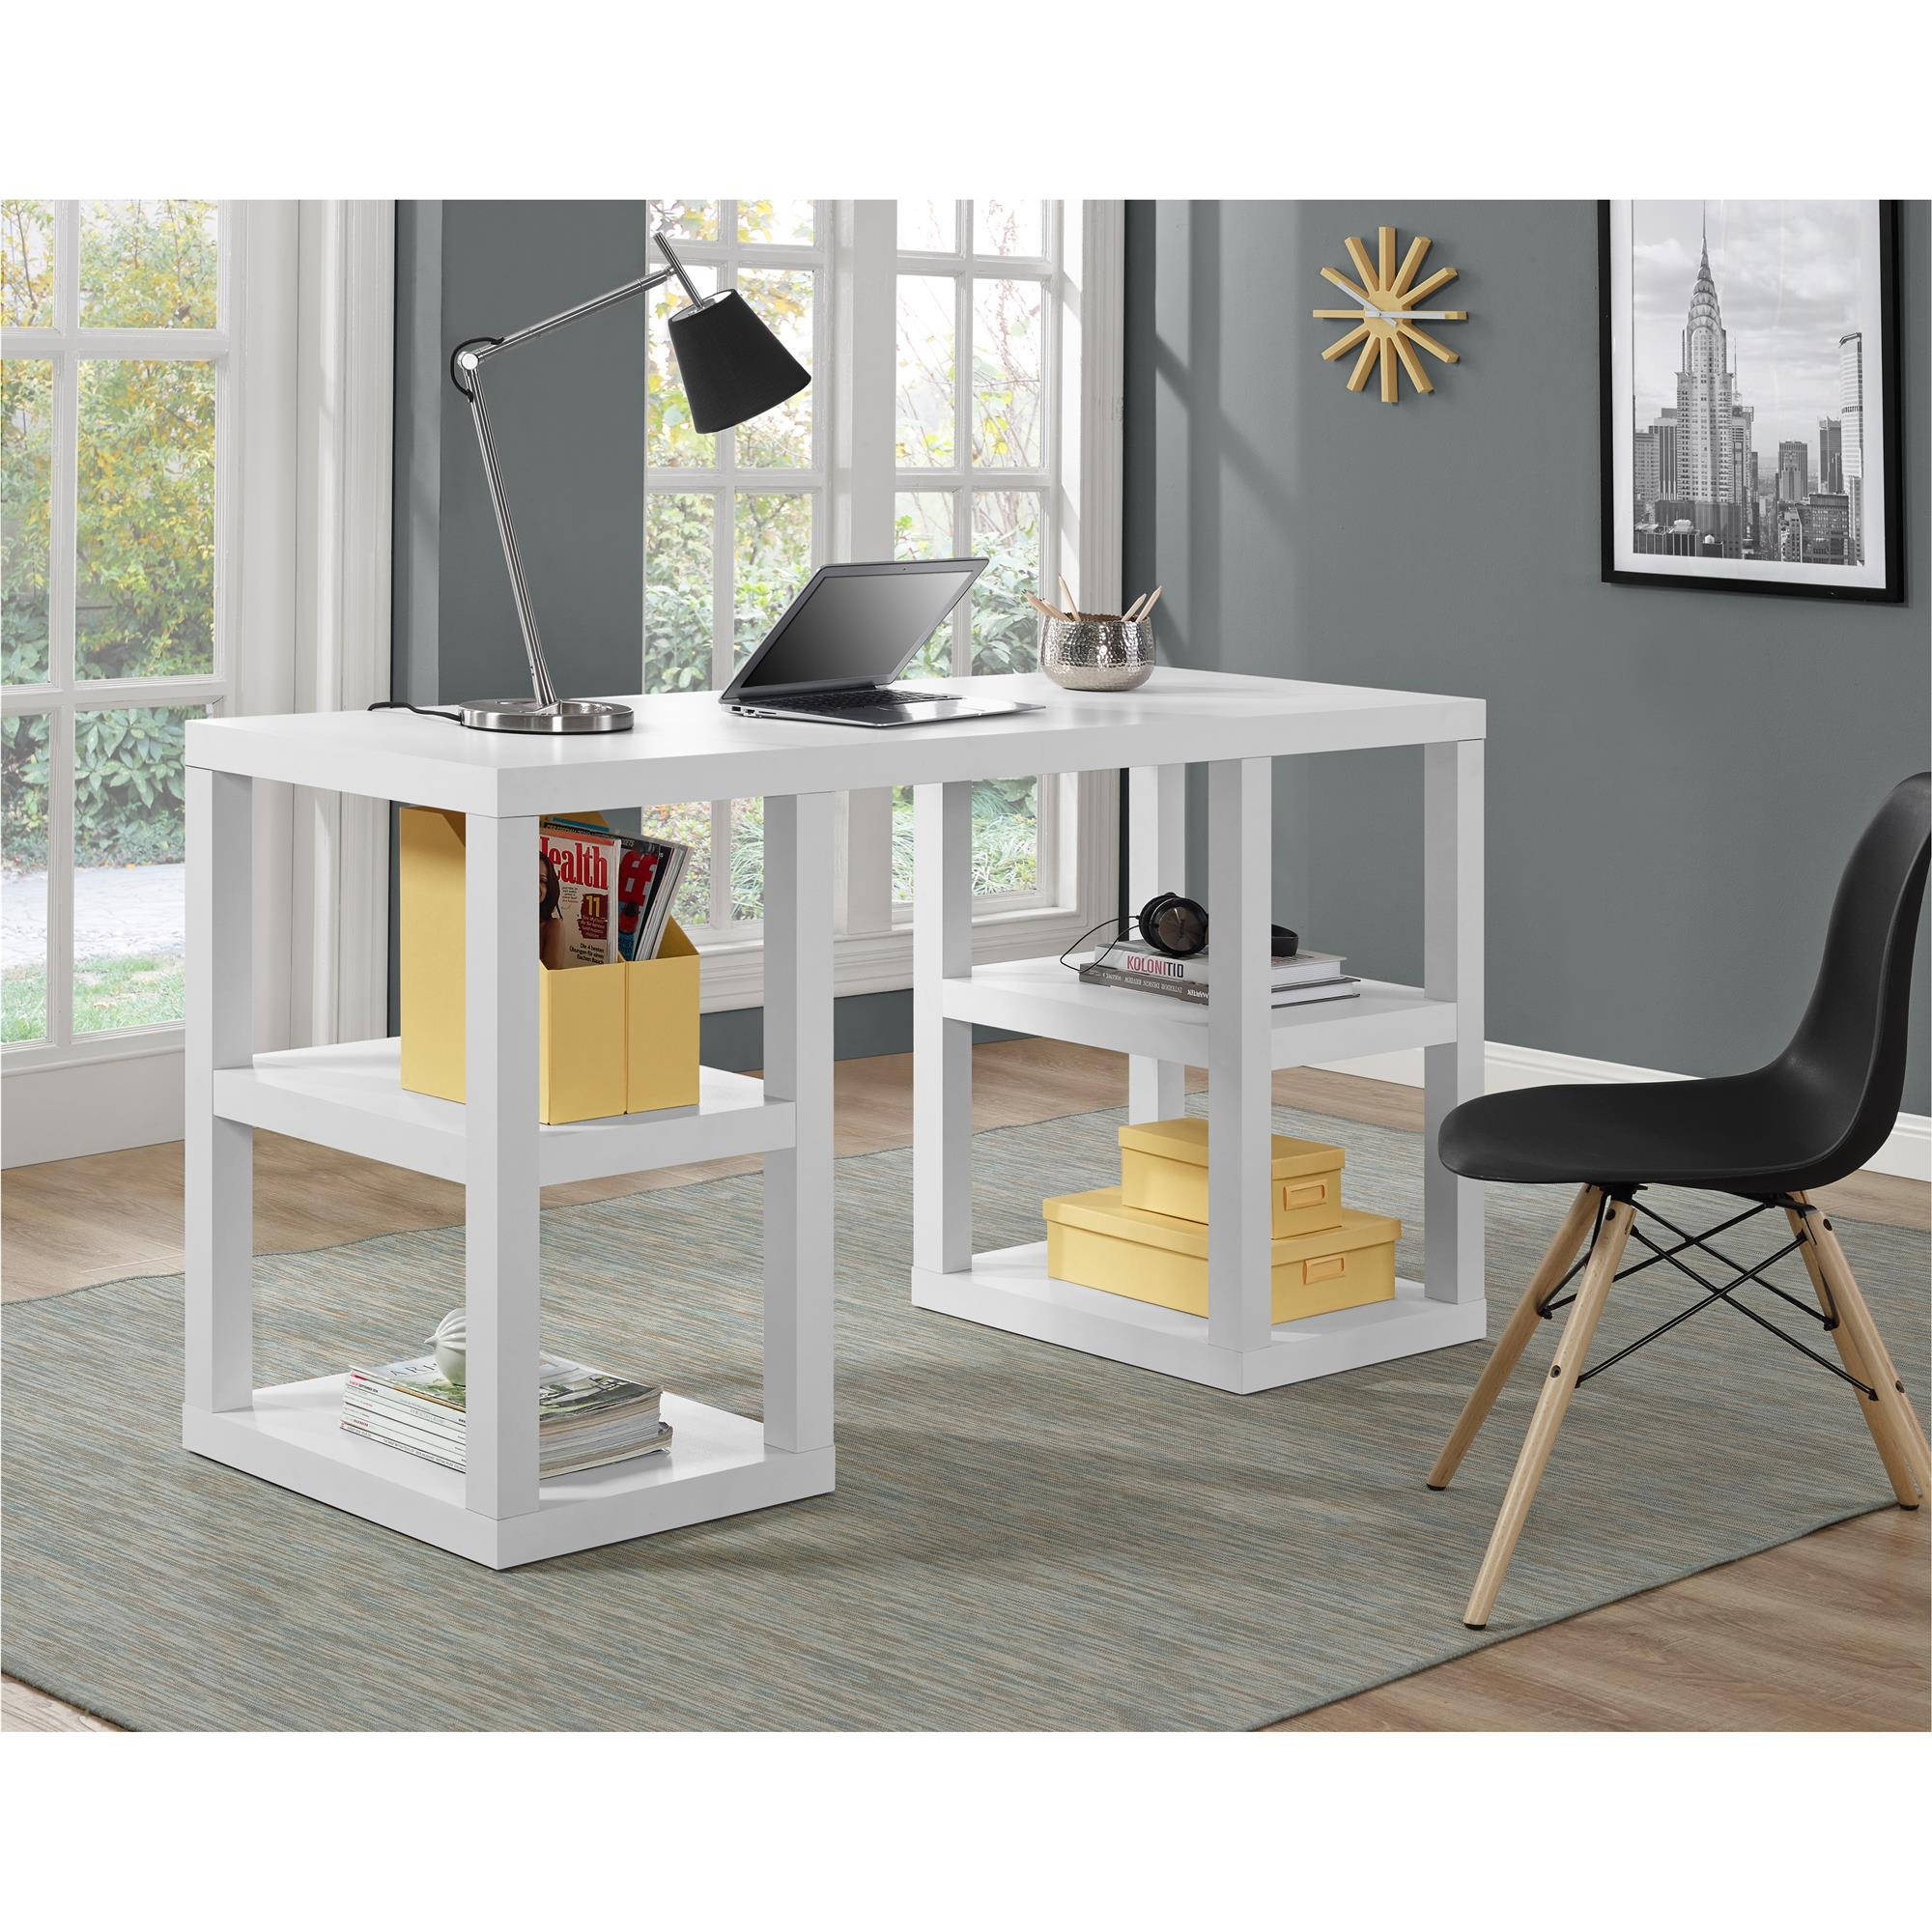 Mainstays Double Pedestal Parsons Desk, White - image 5 of 11